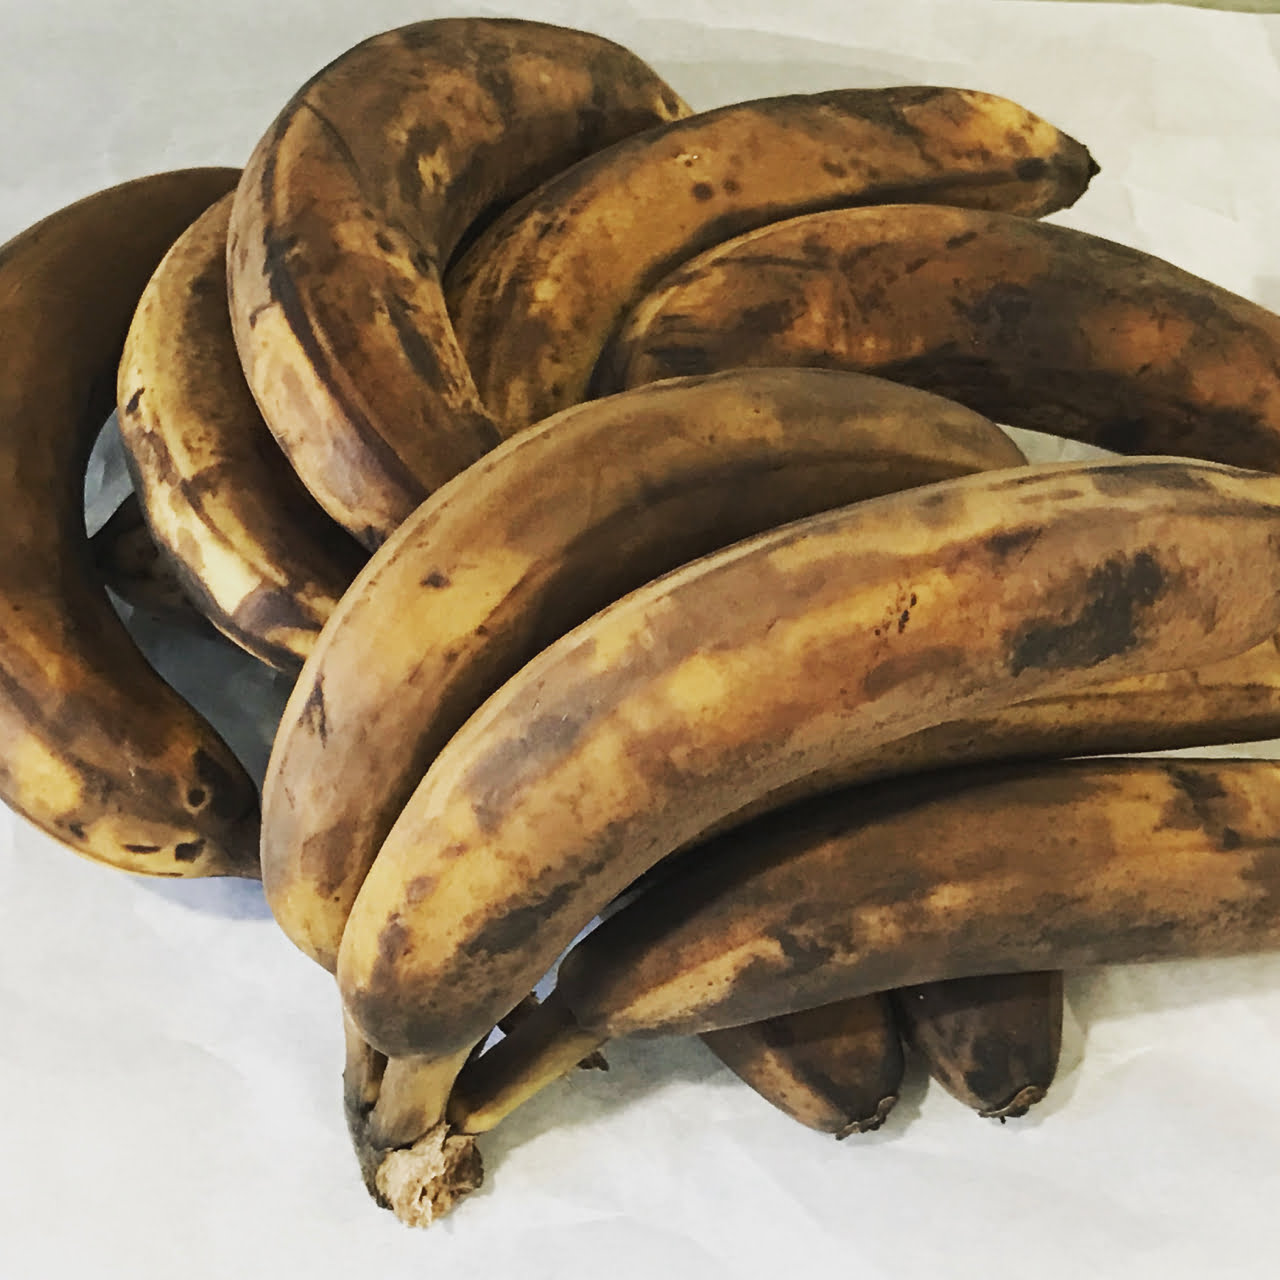 Sweet Ripe Bananas Are Best For Baking